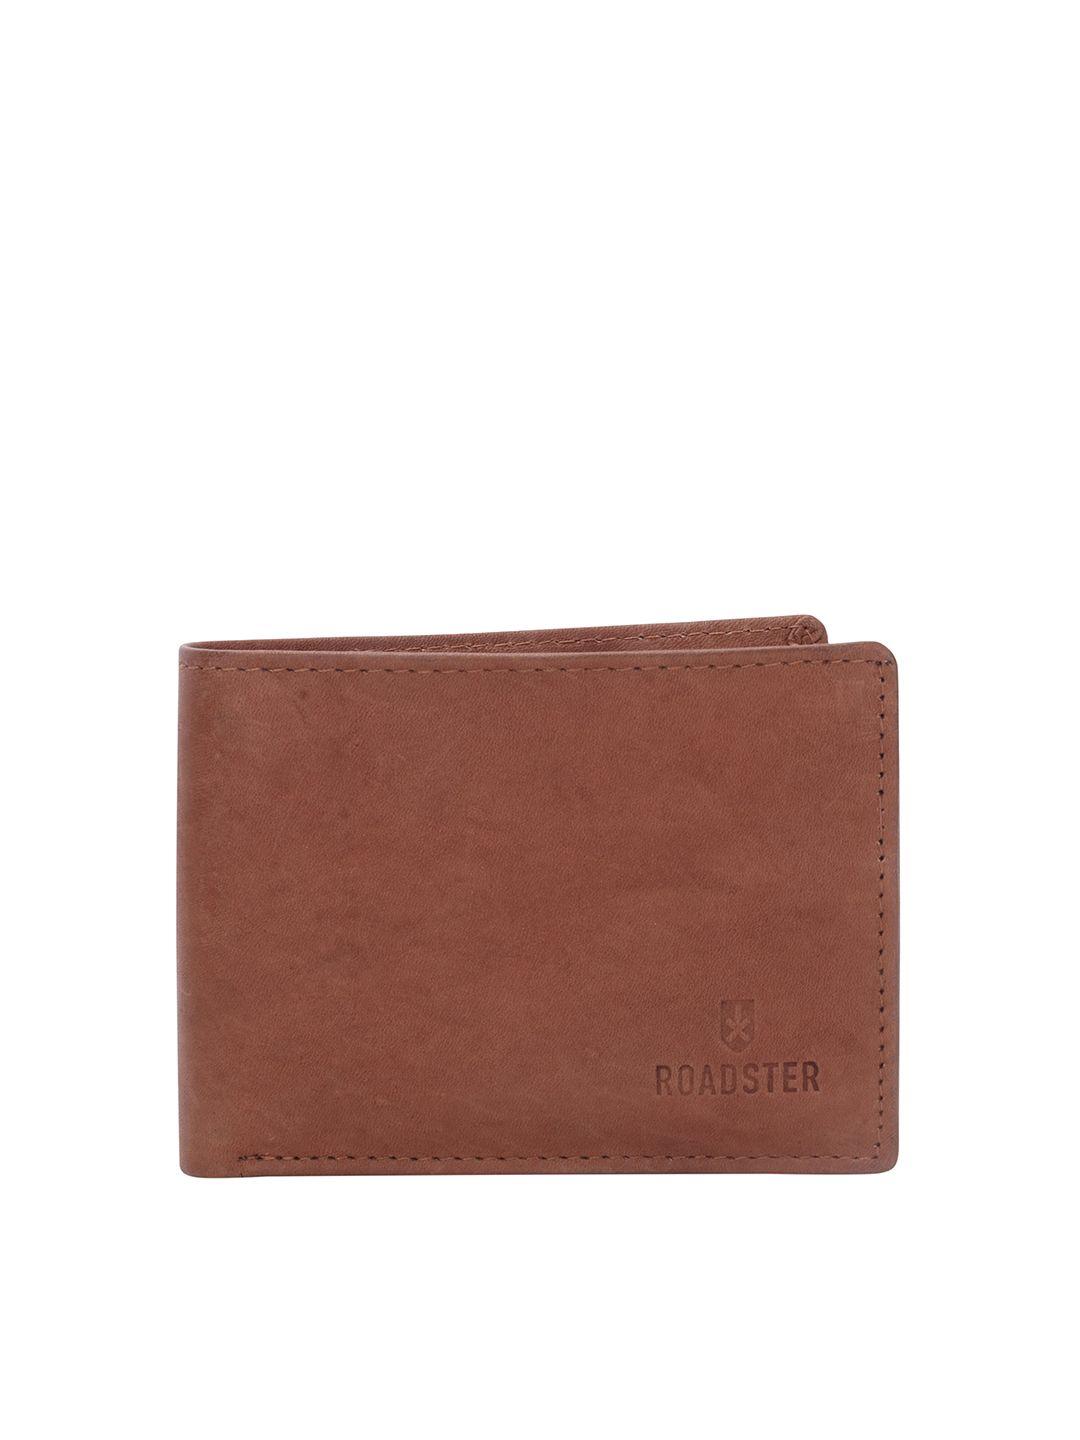 roadster brown men leather two fold wallet